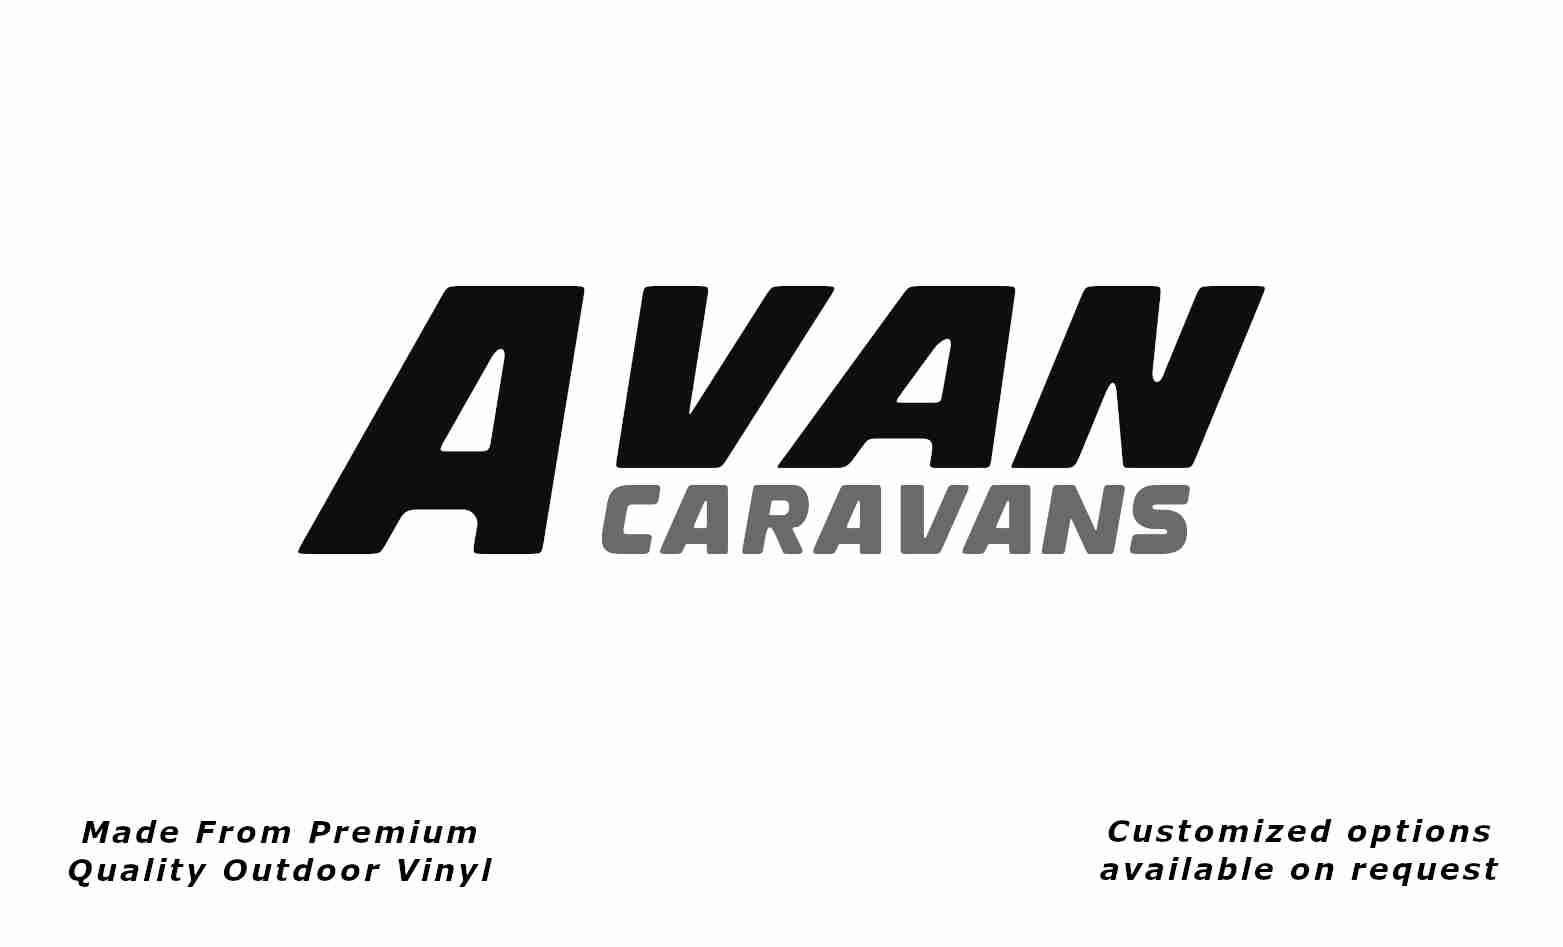 Avan caravans replacement vinyl decal sticker in black and silver grey.